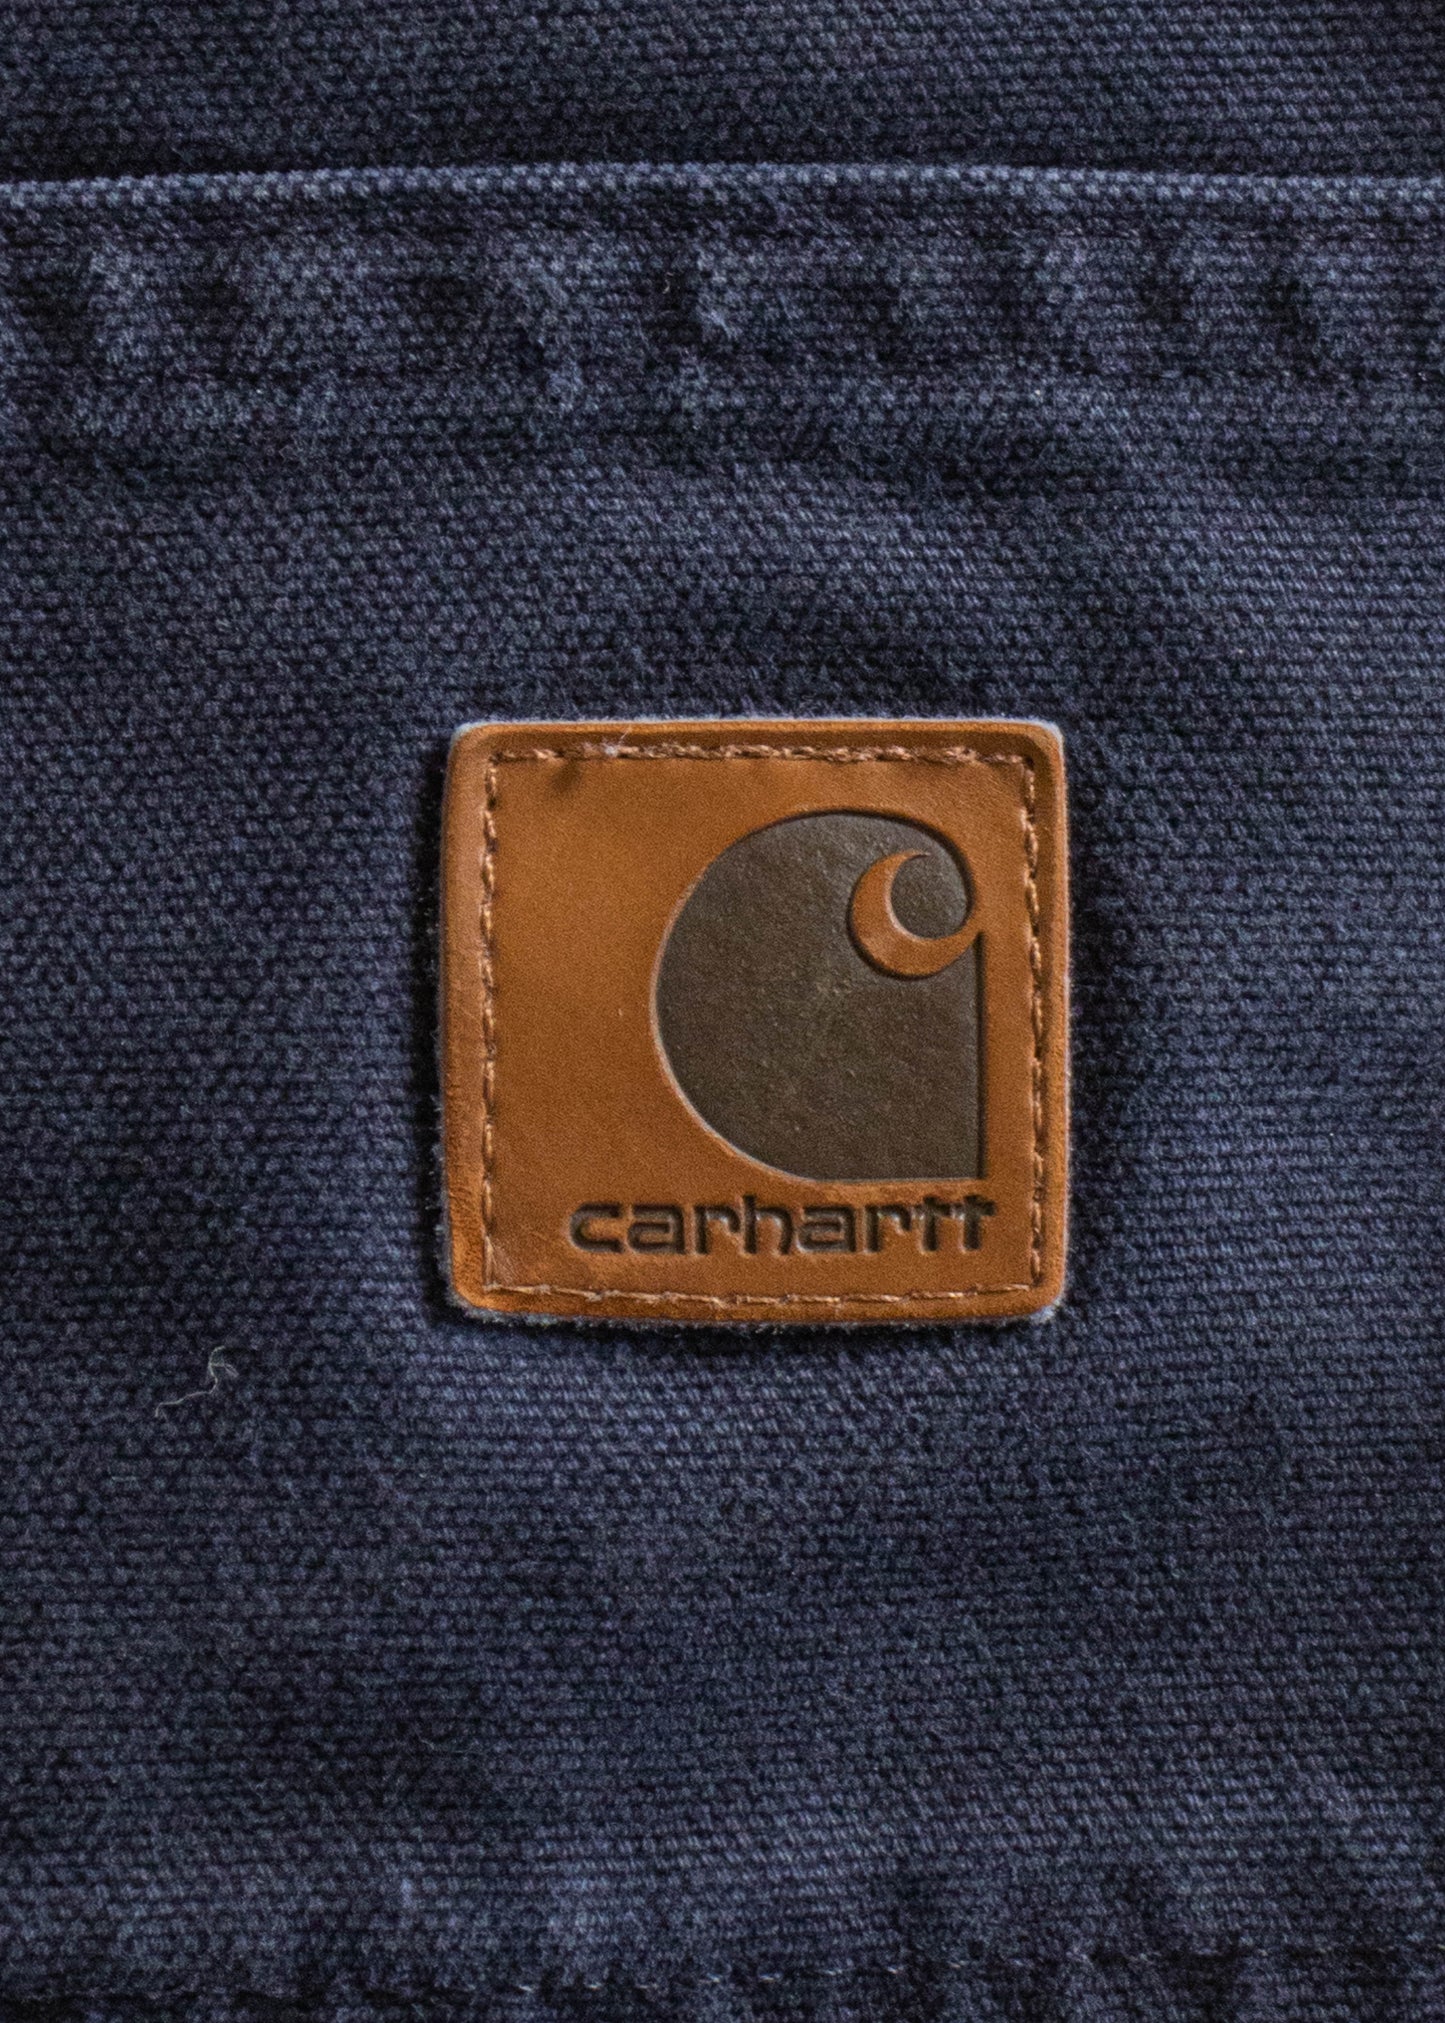 Carhartt Carpenter Pants Size Women's 42 Men's 44